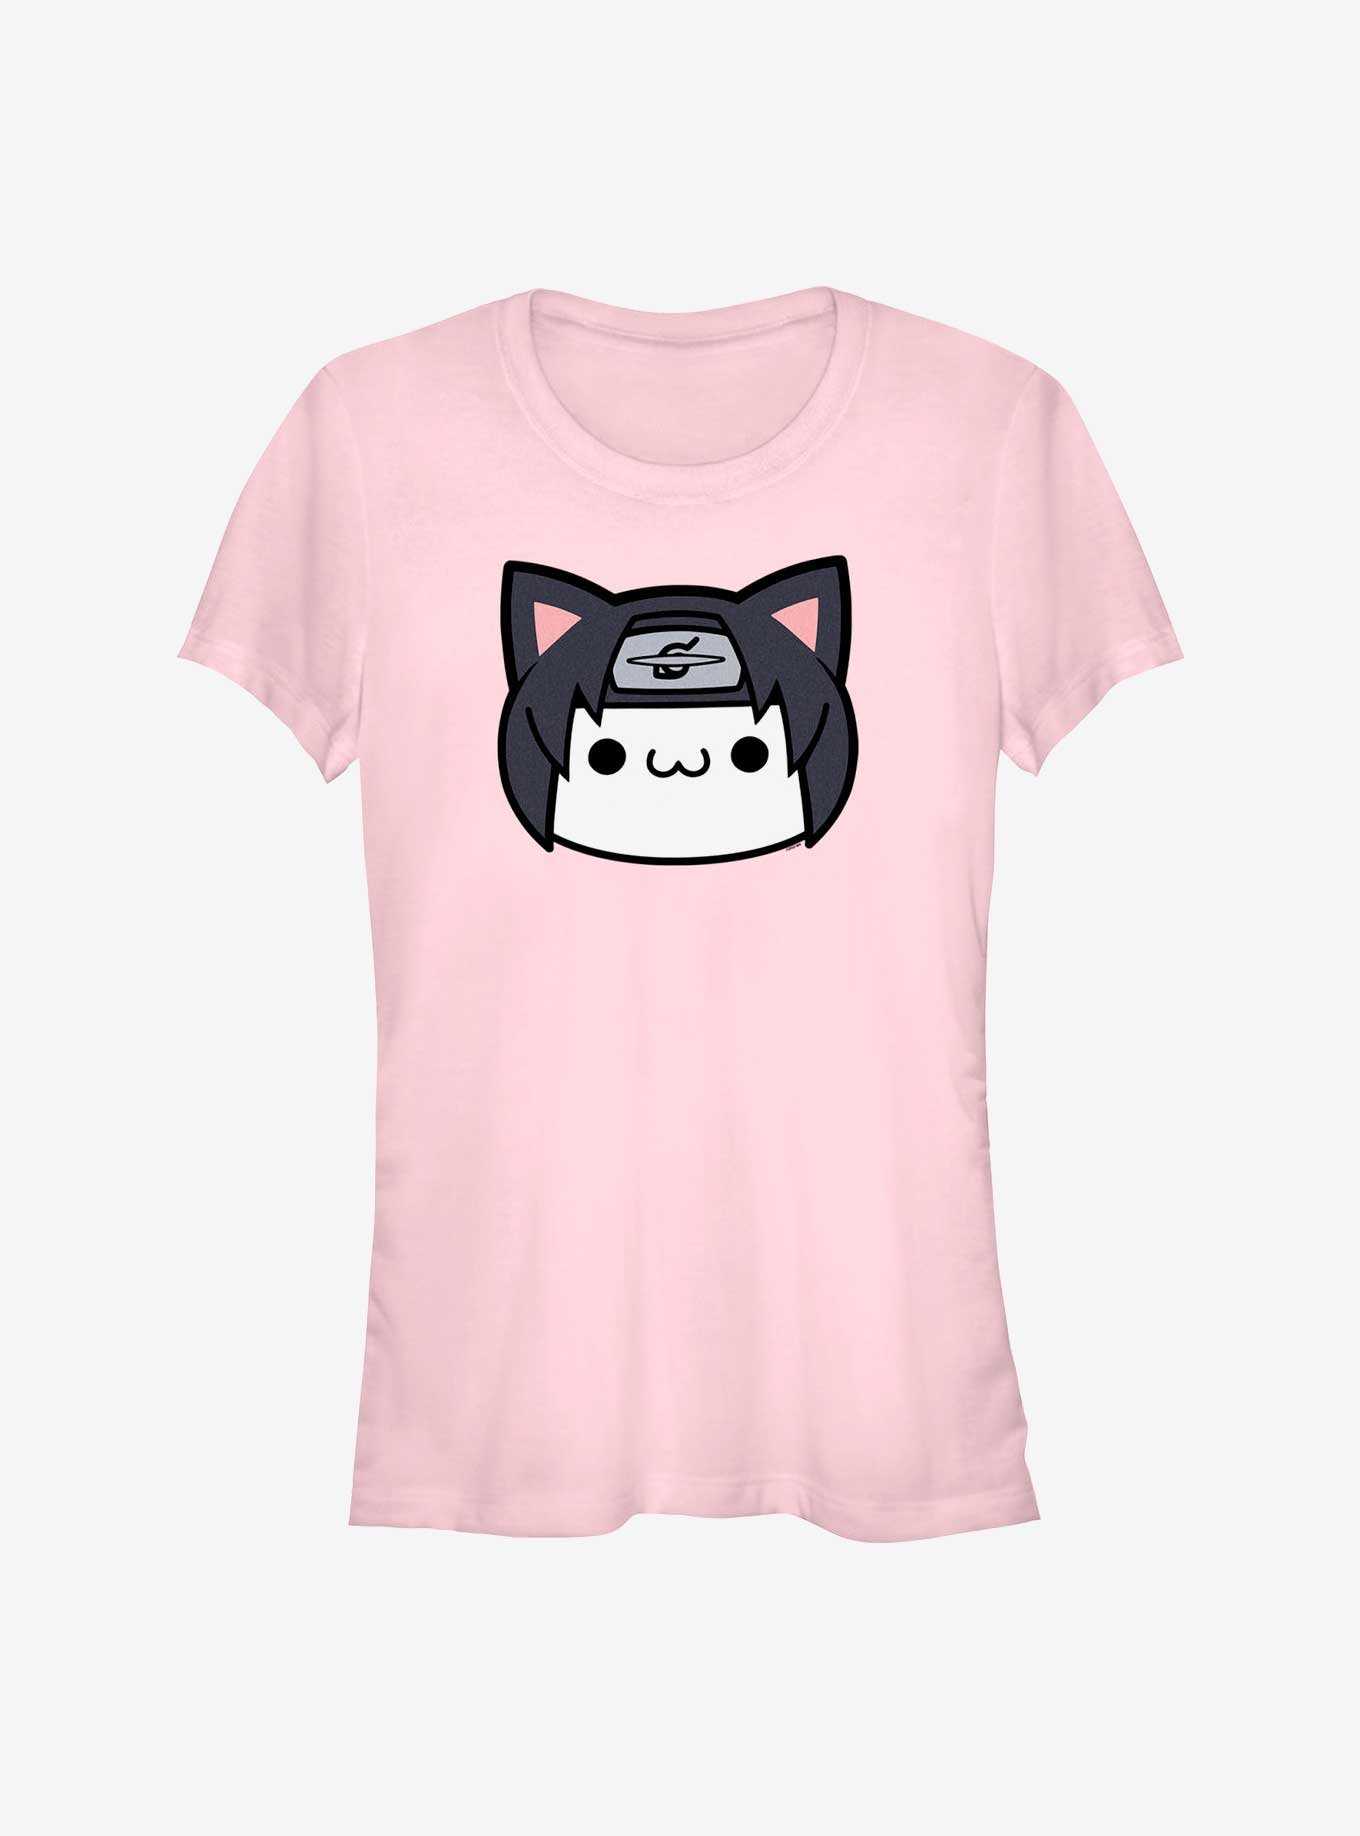 Naruto Itachi Cat Face Girls T-Shirt, , hi-res